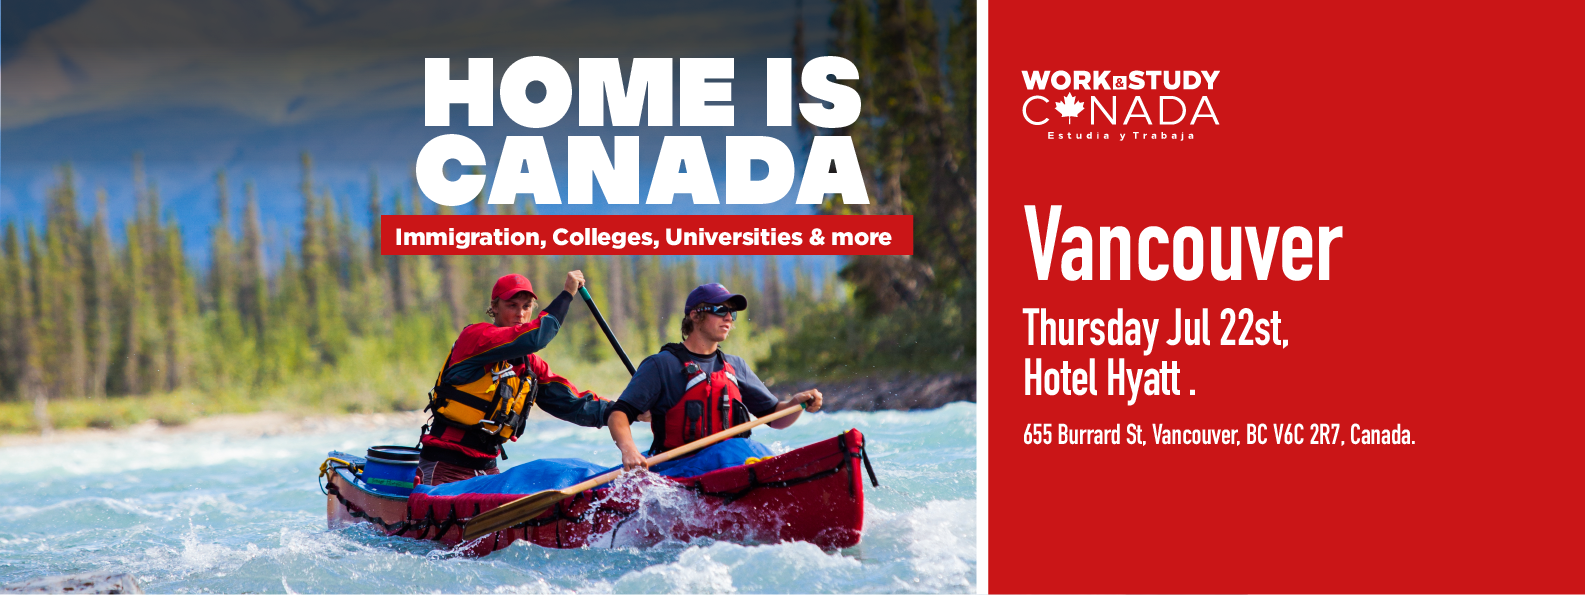 TOUR CANADA kayaks_facebook vancouver (1)